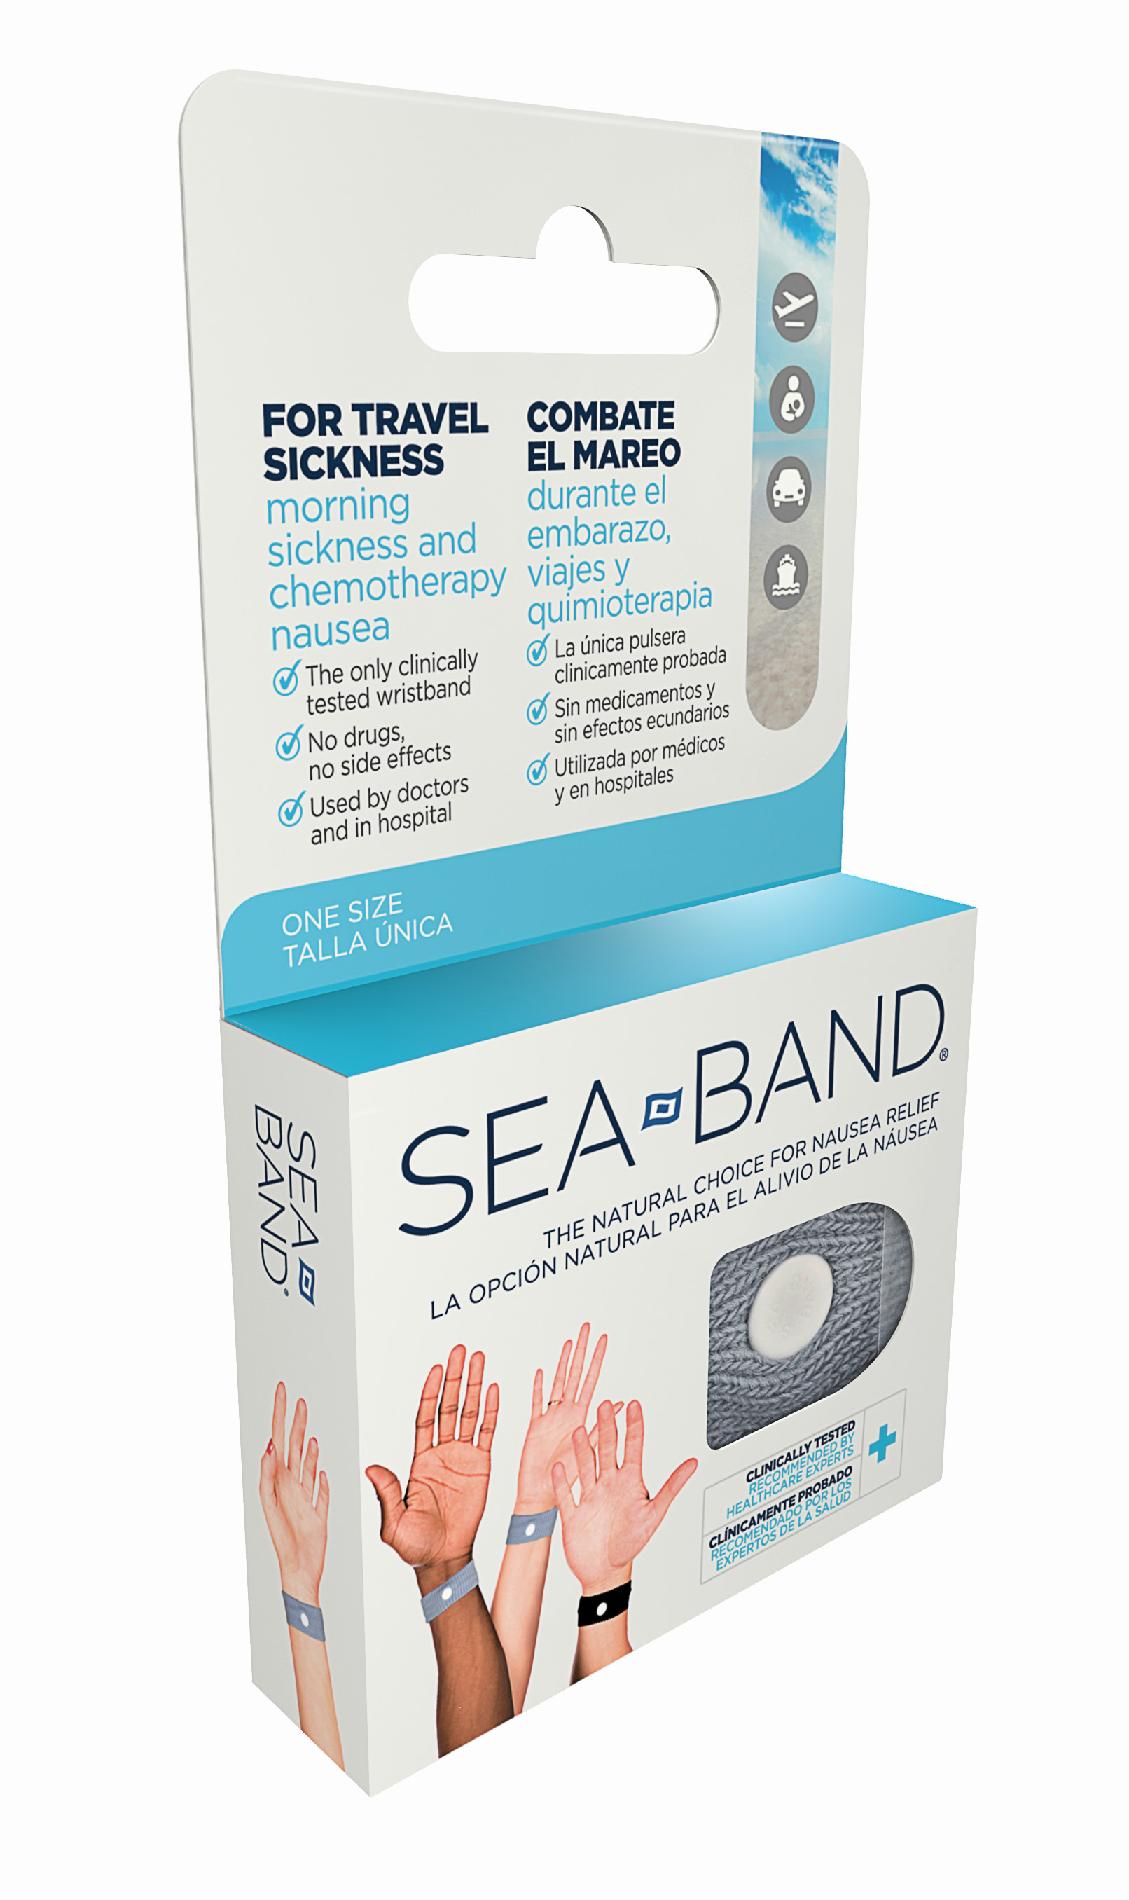 Sea-Band Travel Sick Bnd Bi-Lin, .02c